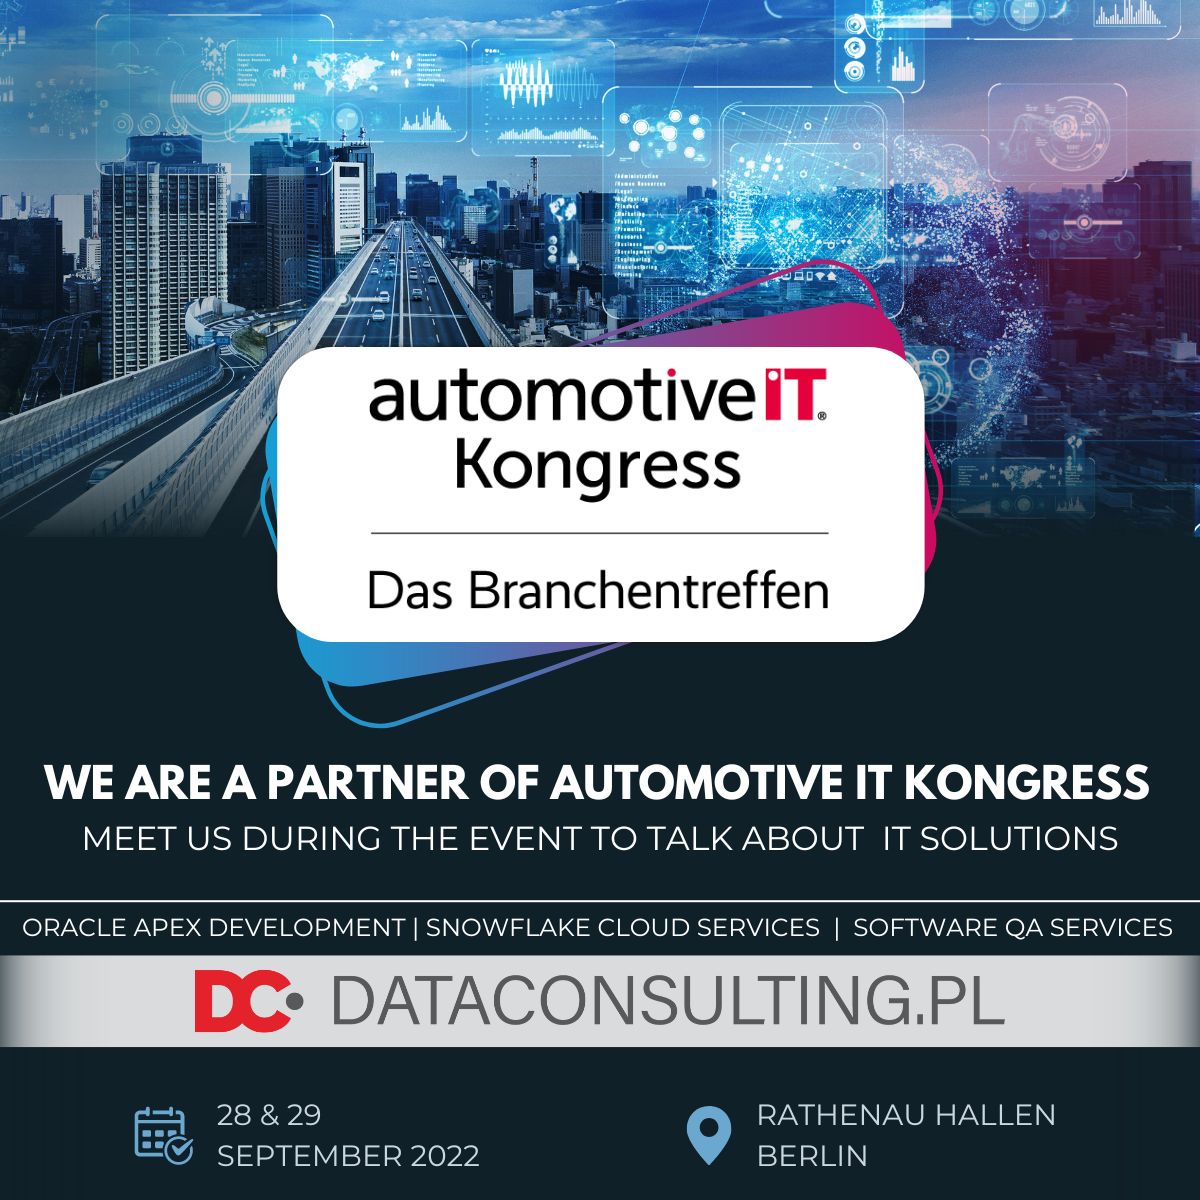 dataconsulting.pl Partner des automotiveIT Kongress ist.